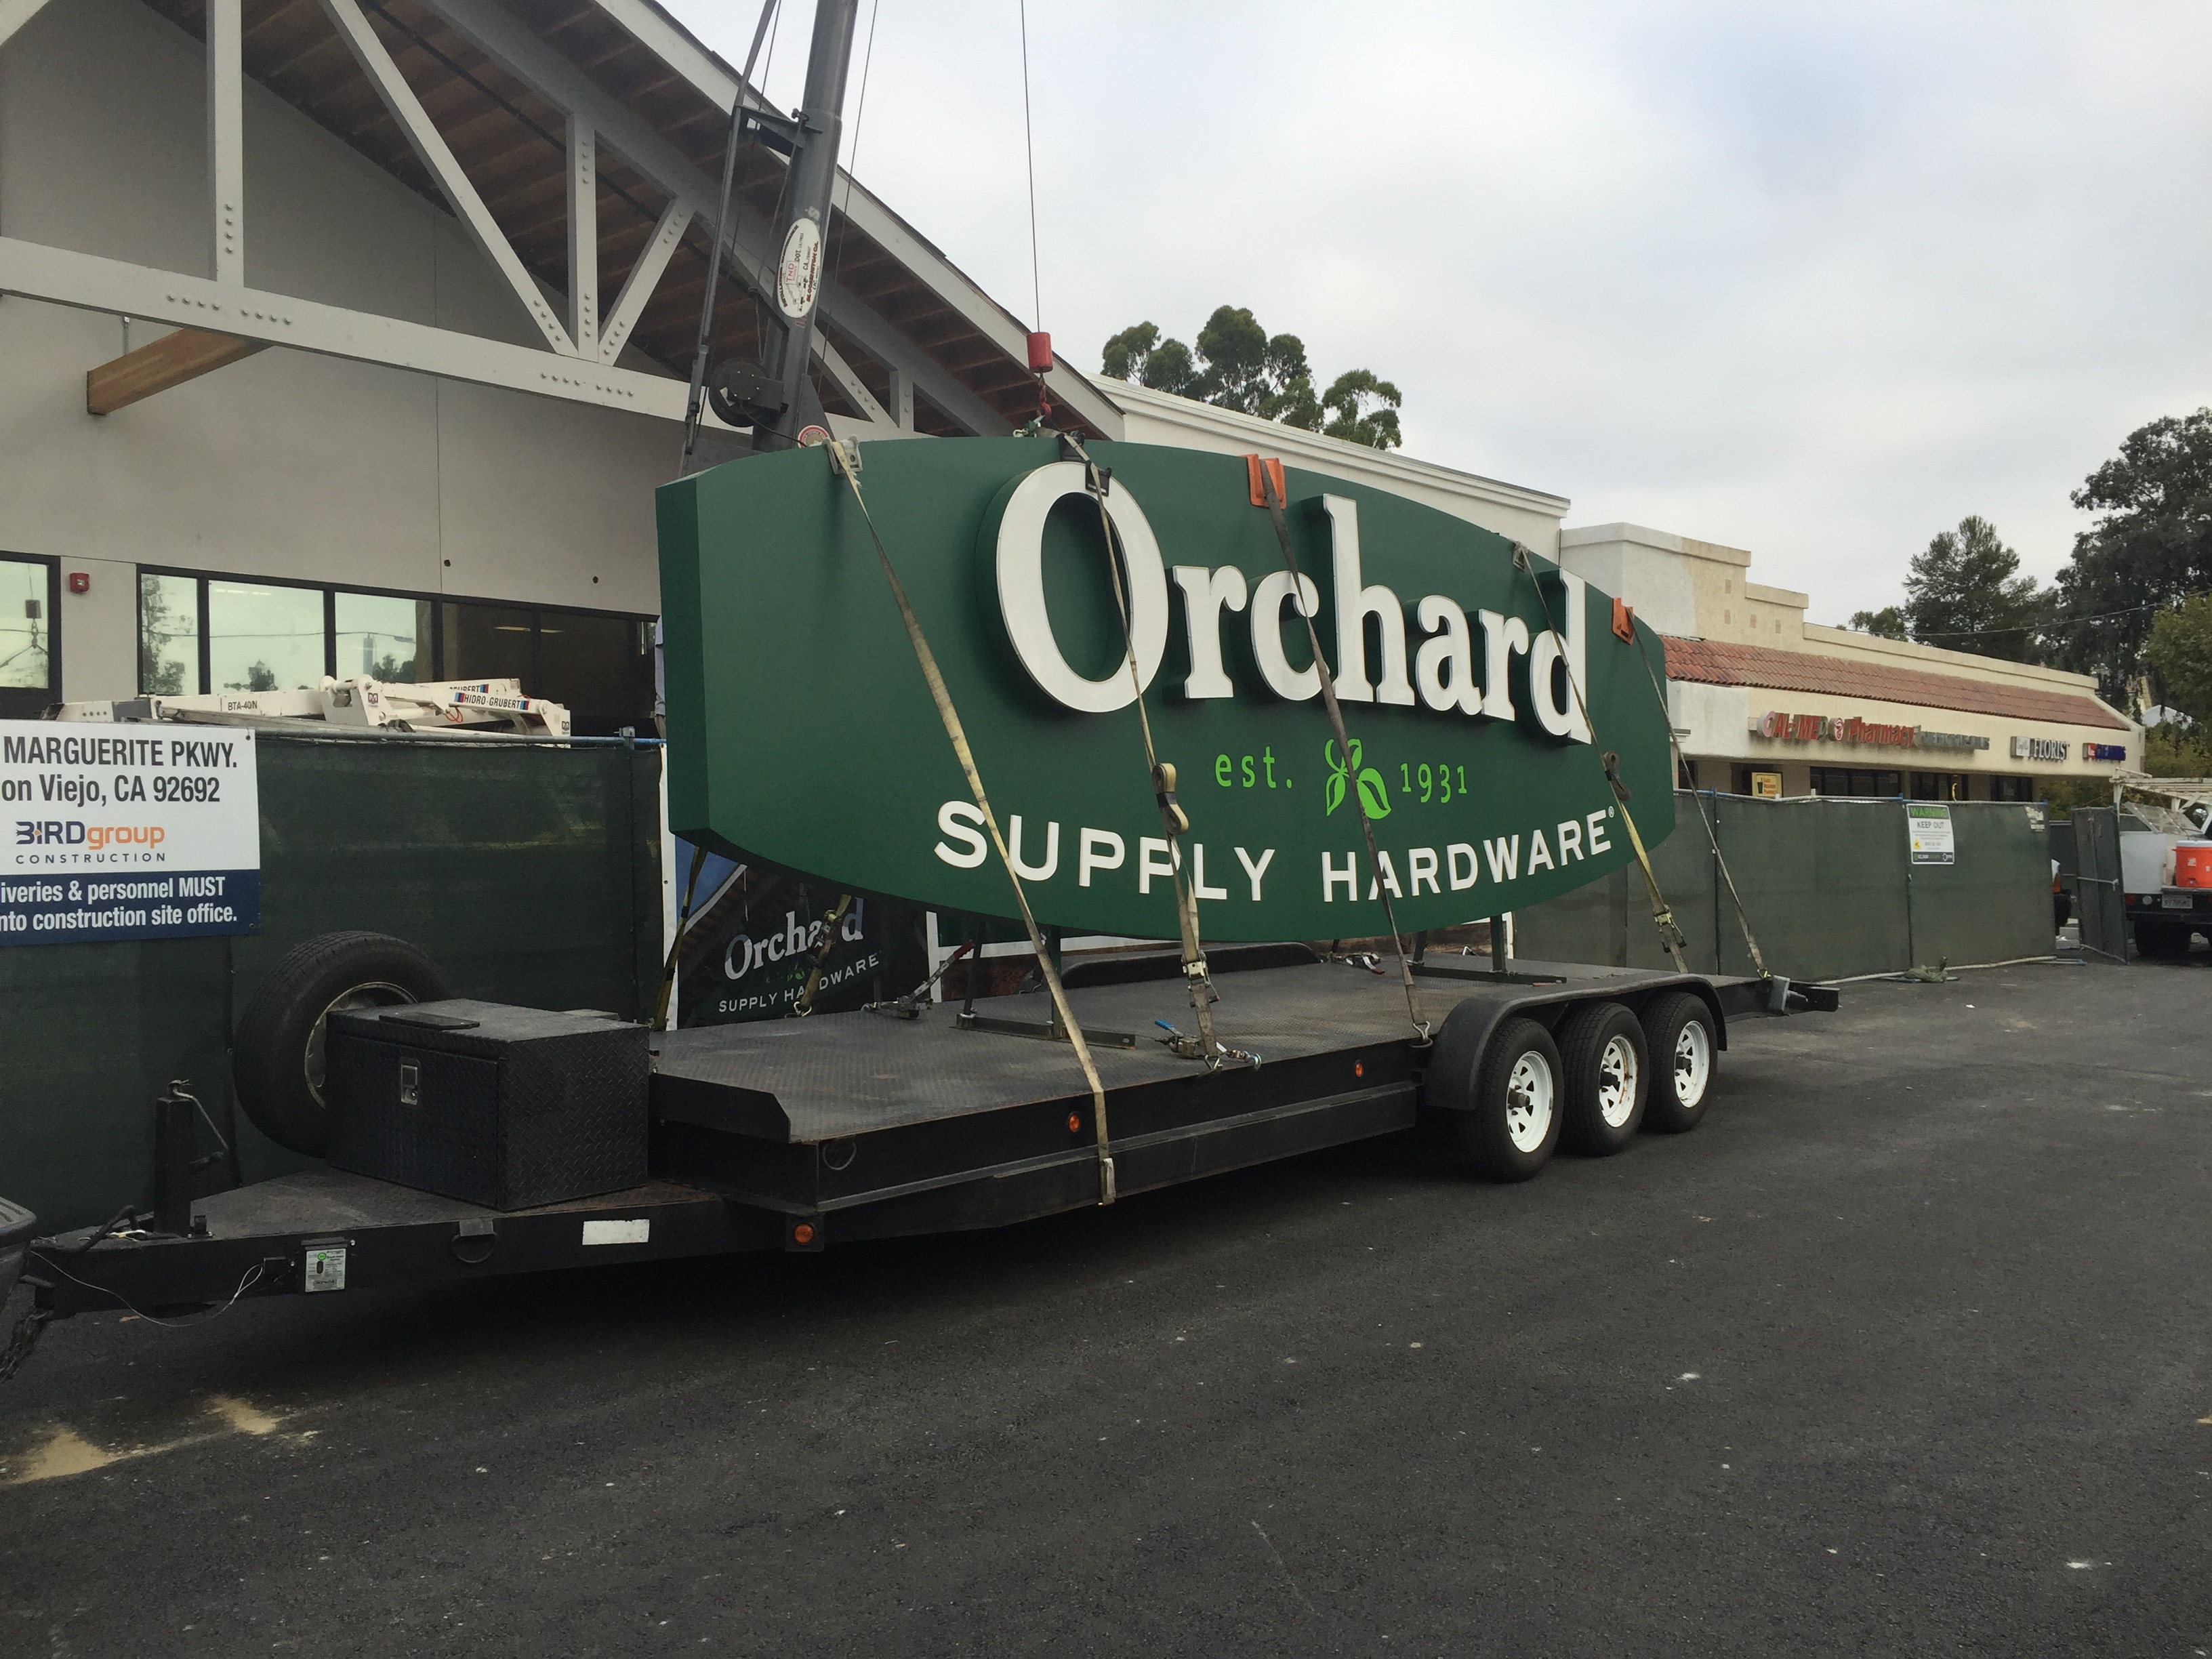 Orchard Hardware - Mission Viejo, CA - Birdgroup Construction